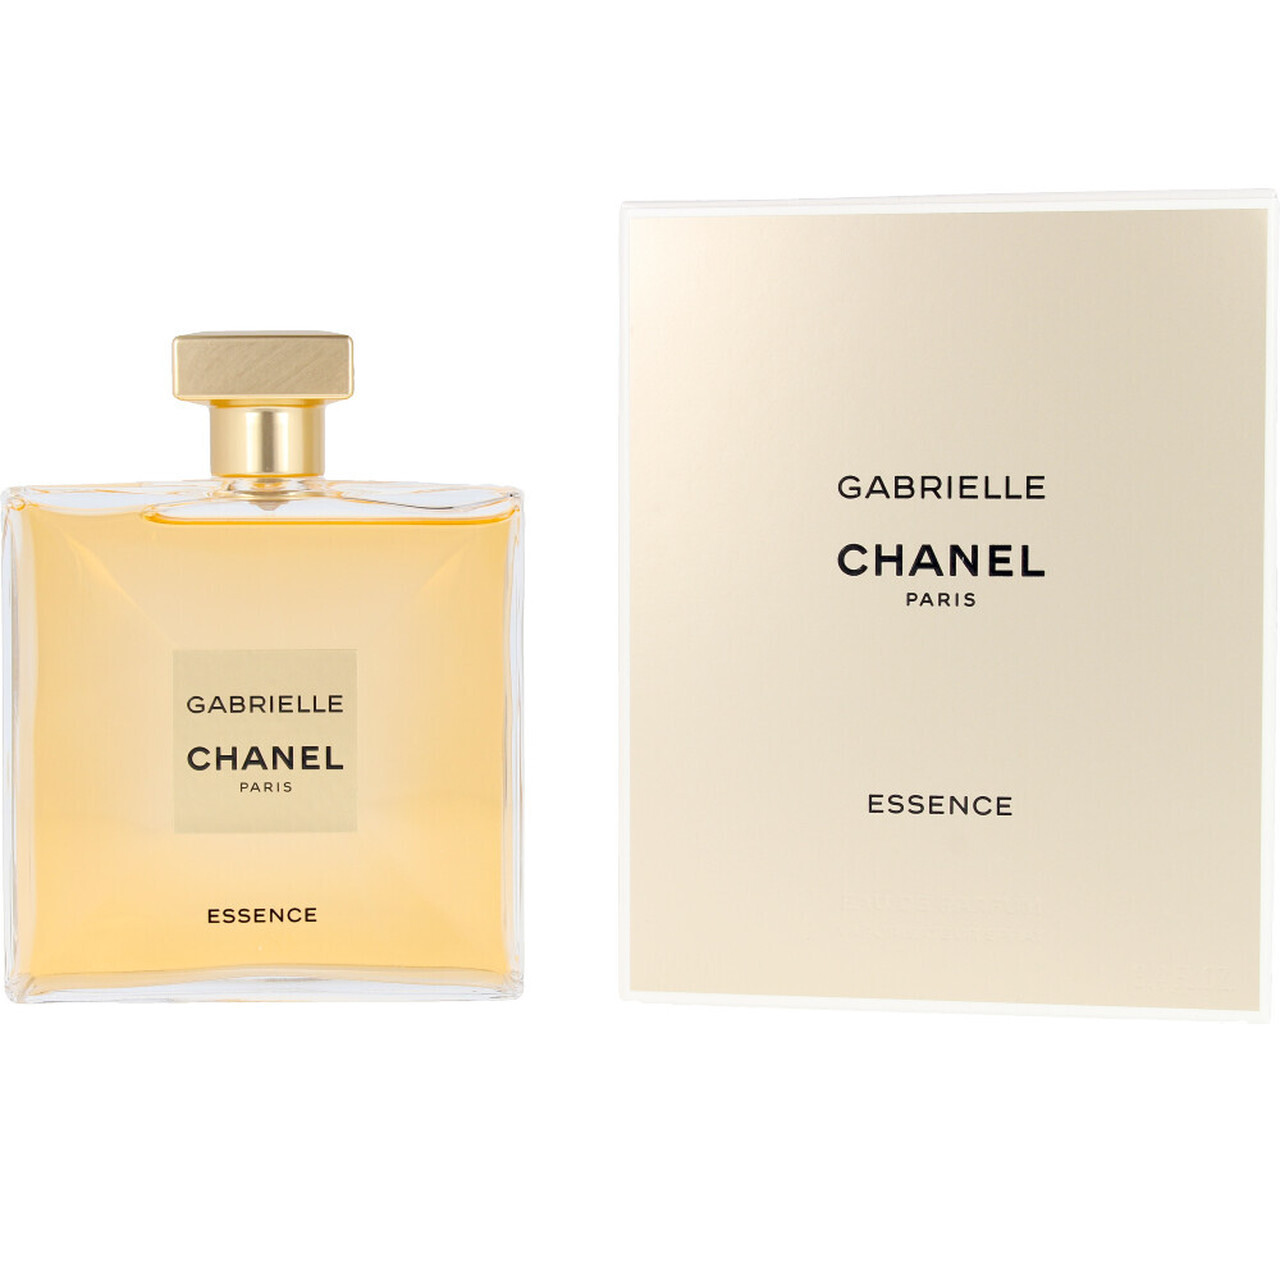 CHANEL Gabrielle Chanel Essence — Covet & Acquire